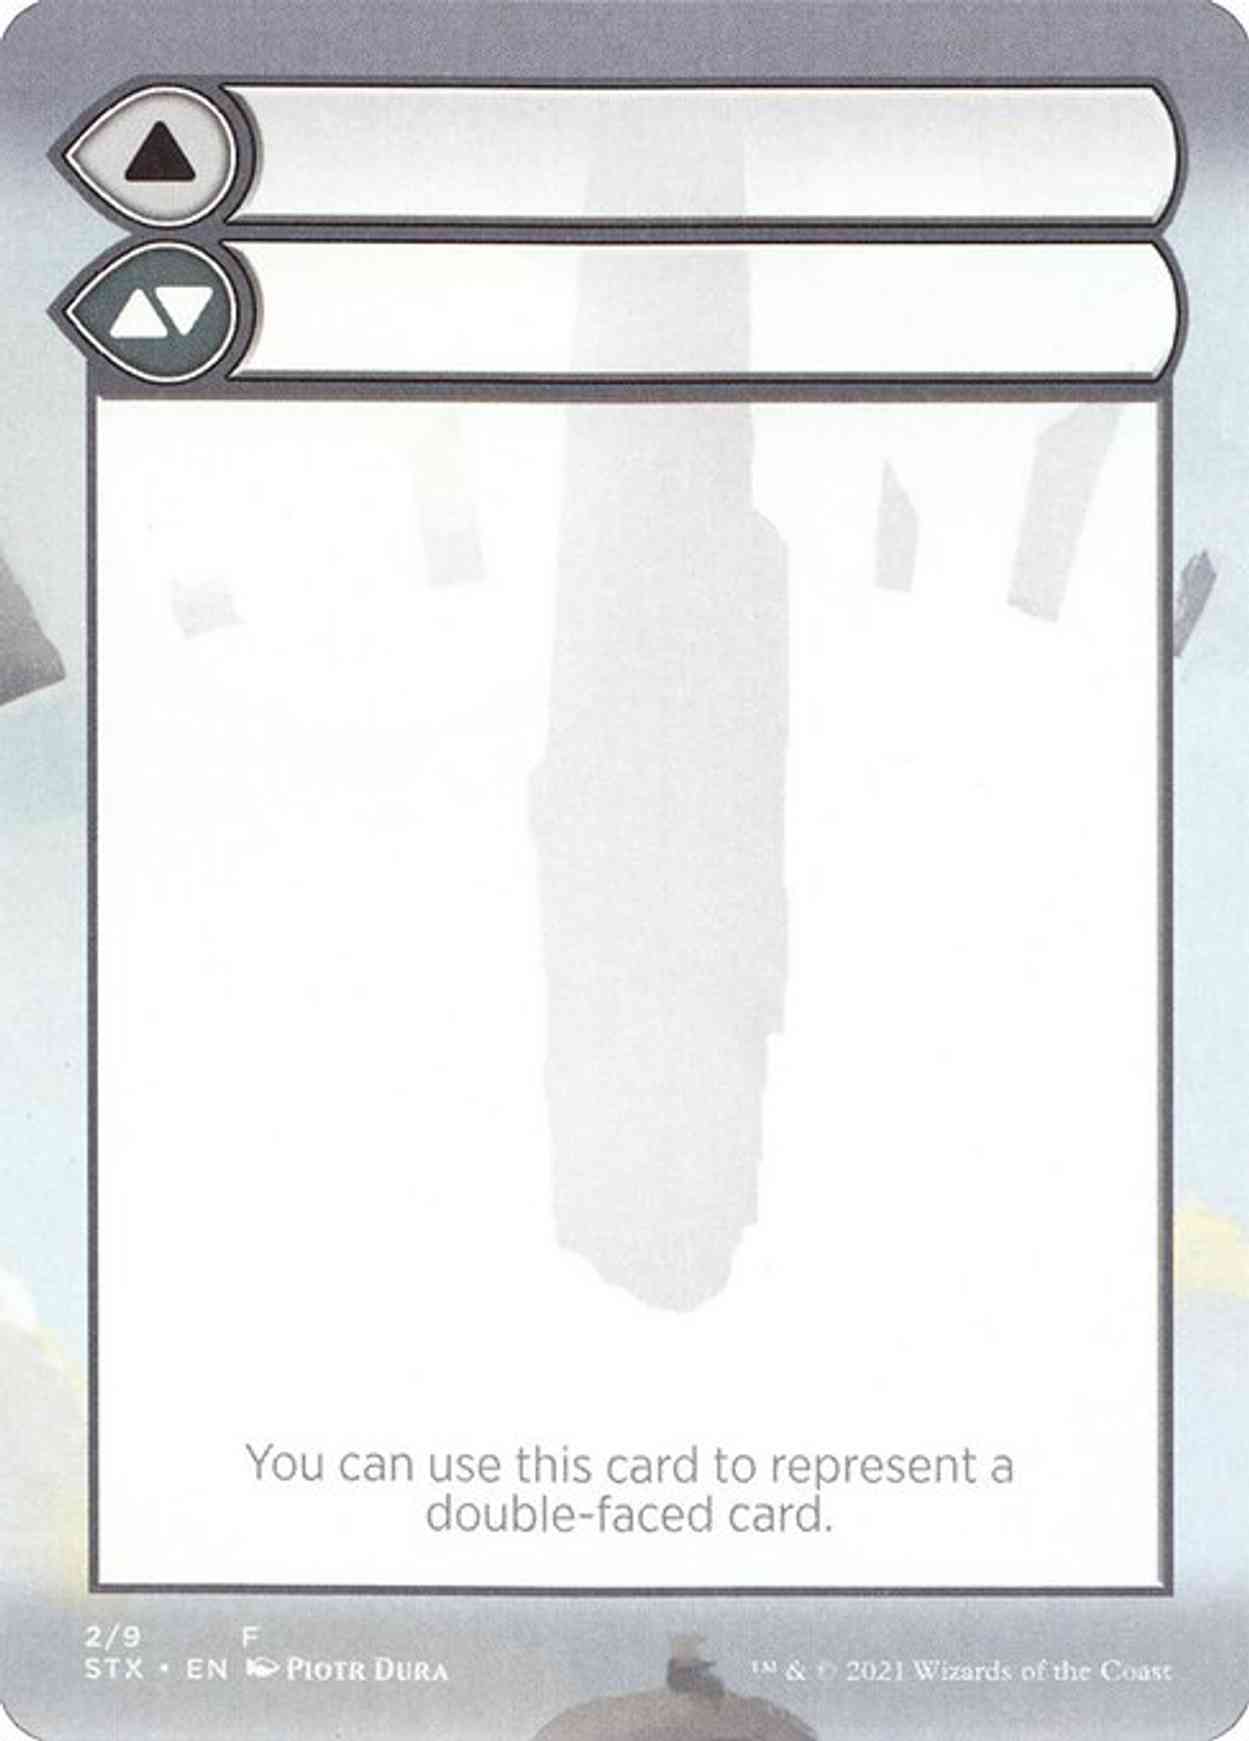 Helper Card (2/9) magic card front